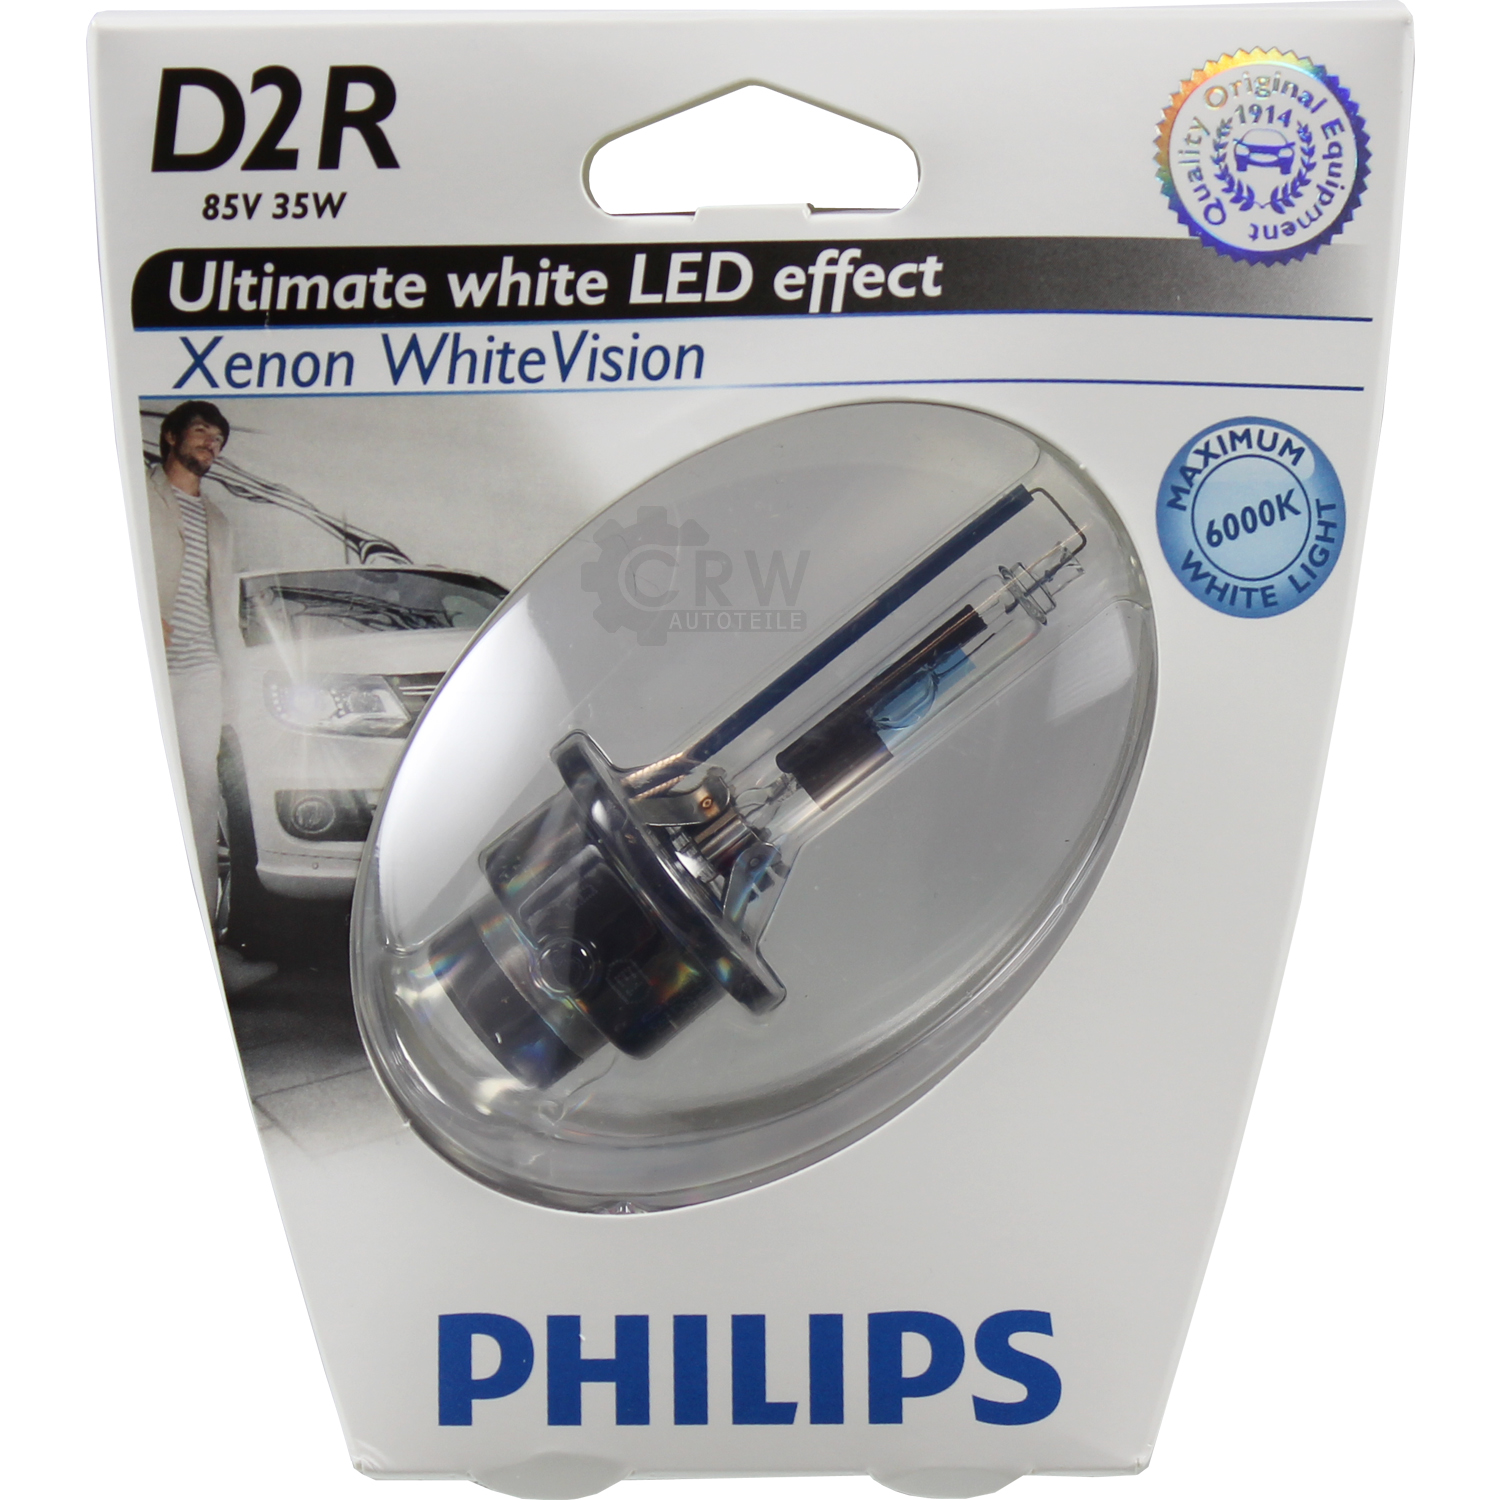 Philips D2R 35W Ultimate WhiteVision 6000K Xenon LED Effect 1 Stück 85126WHVS1